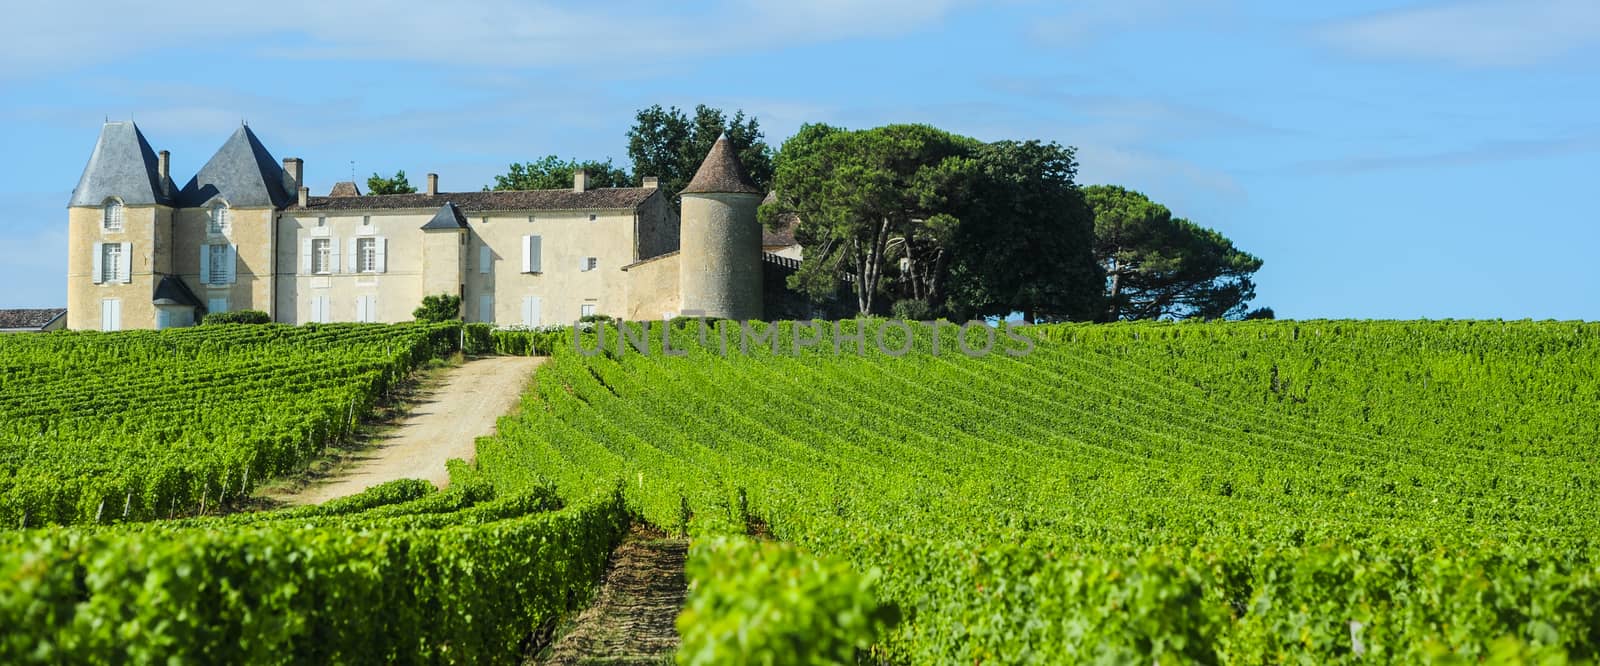 Vineyard and Chateau d'Yquem, Sauternes Region, Aquitaine, Franc by FreeProd